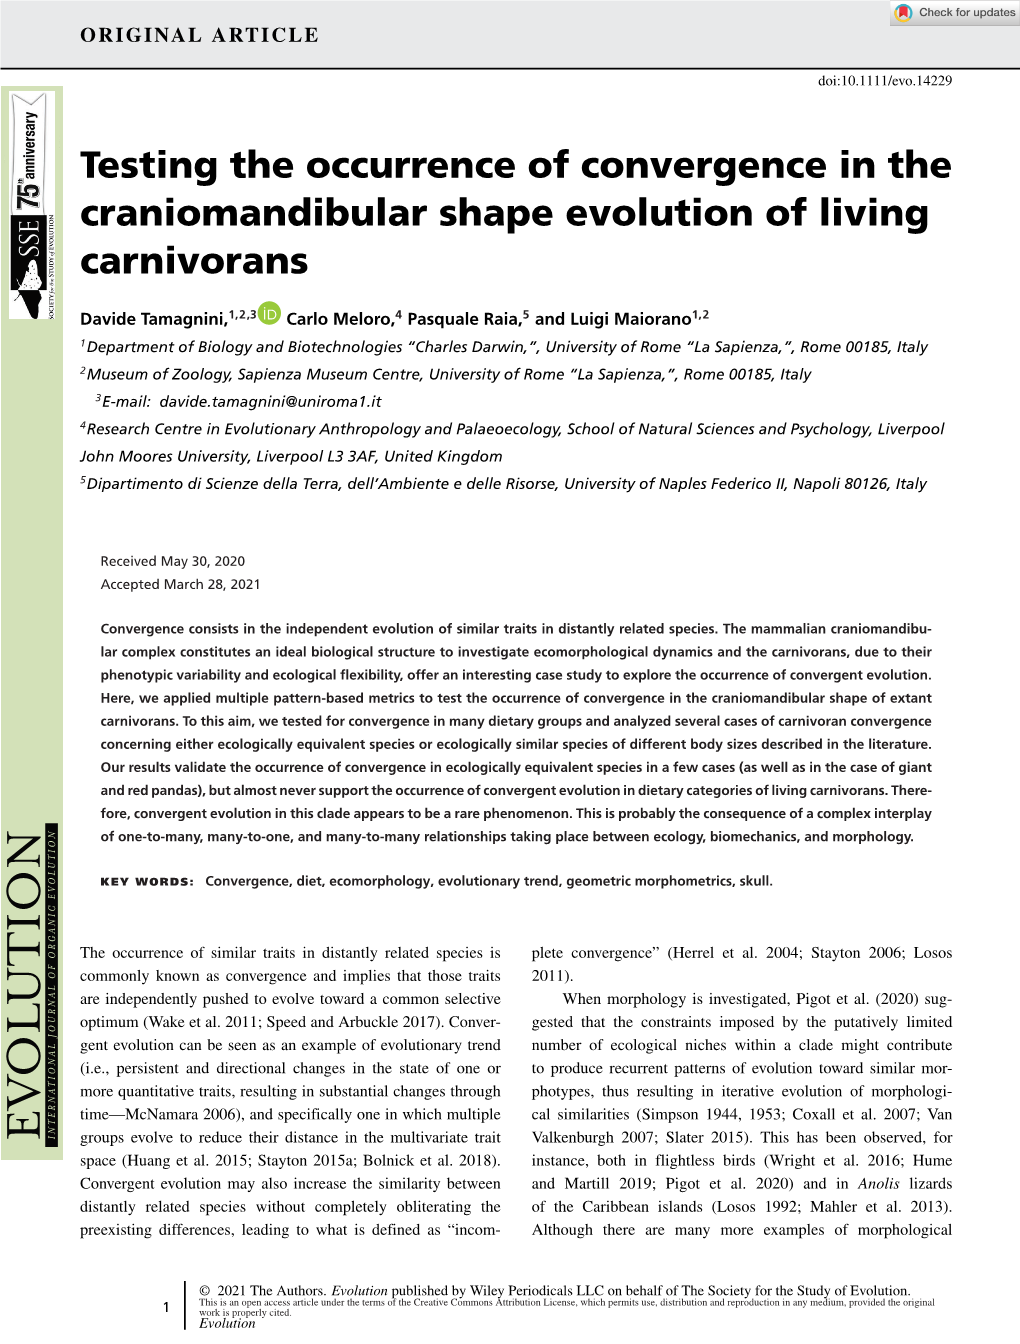 Testing the Occurrence of Convergence in the Craniomandibular Shape Evolution of Living Carnivorans